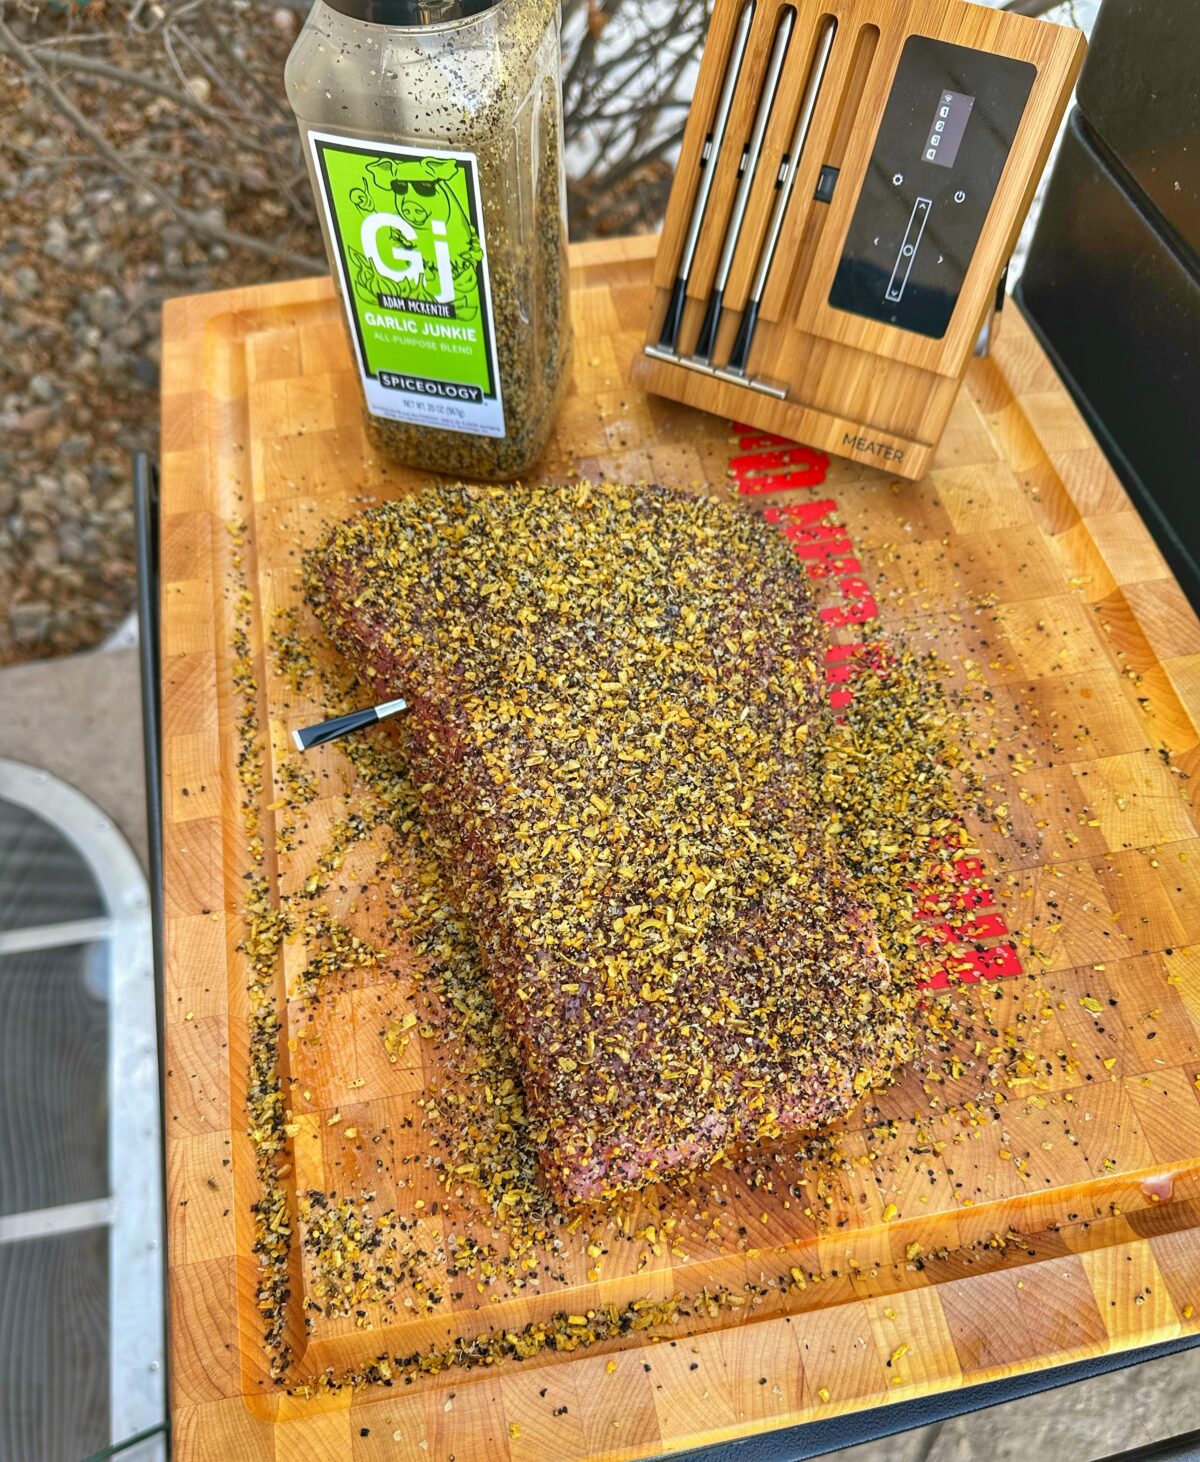 Corned beef seasoned with Garlic Junkie on a cutting board.